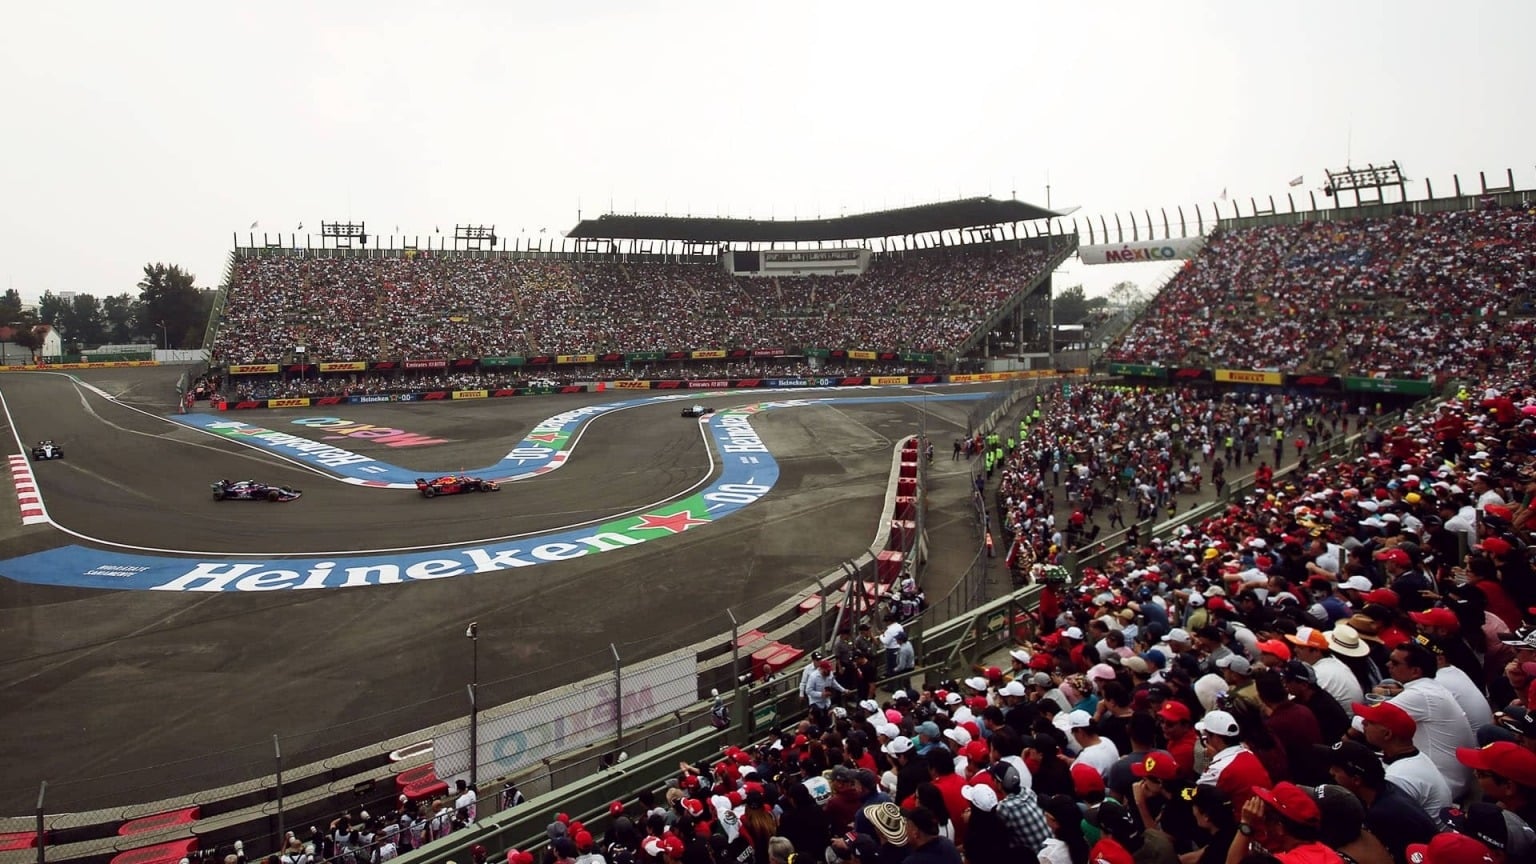 F1 Meksika GP 2023: Saat kaçta, nasıl canlı izlenir?